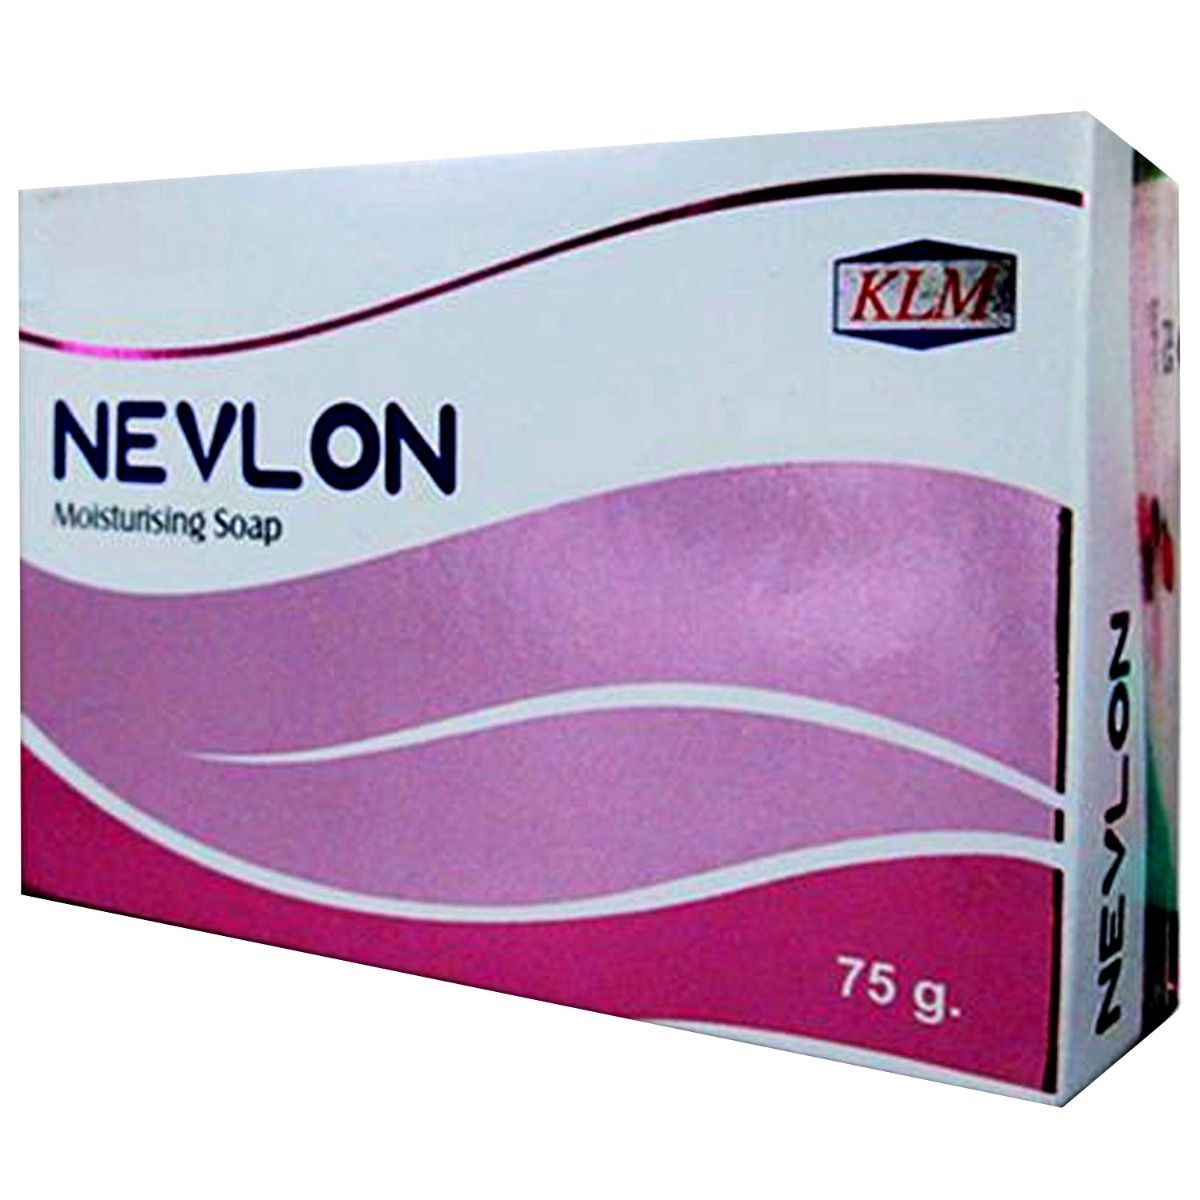 KLM Nevlon Moisturizing Soap, 75 gm, Pack of 1 